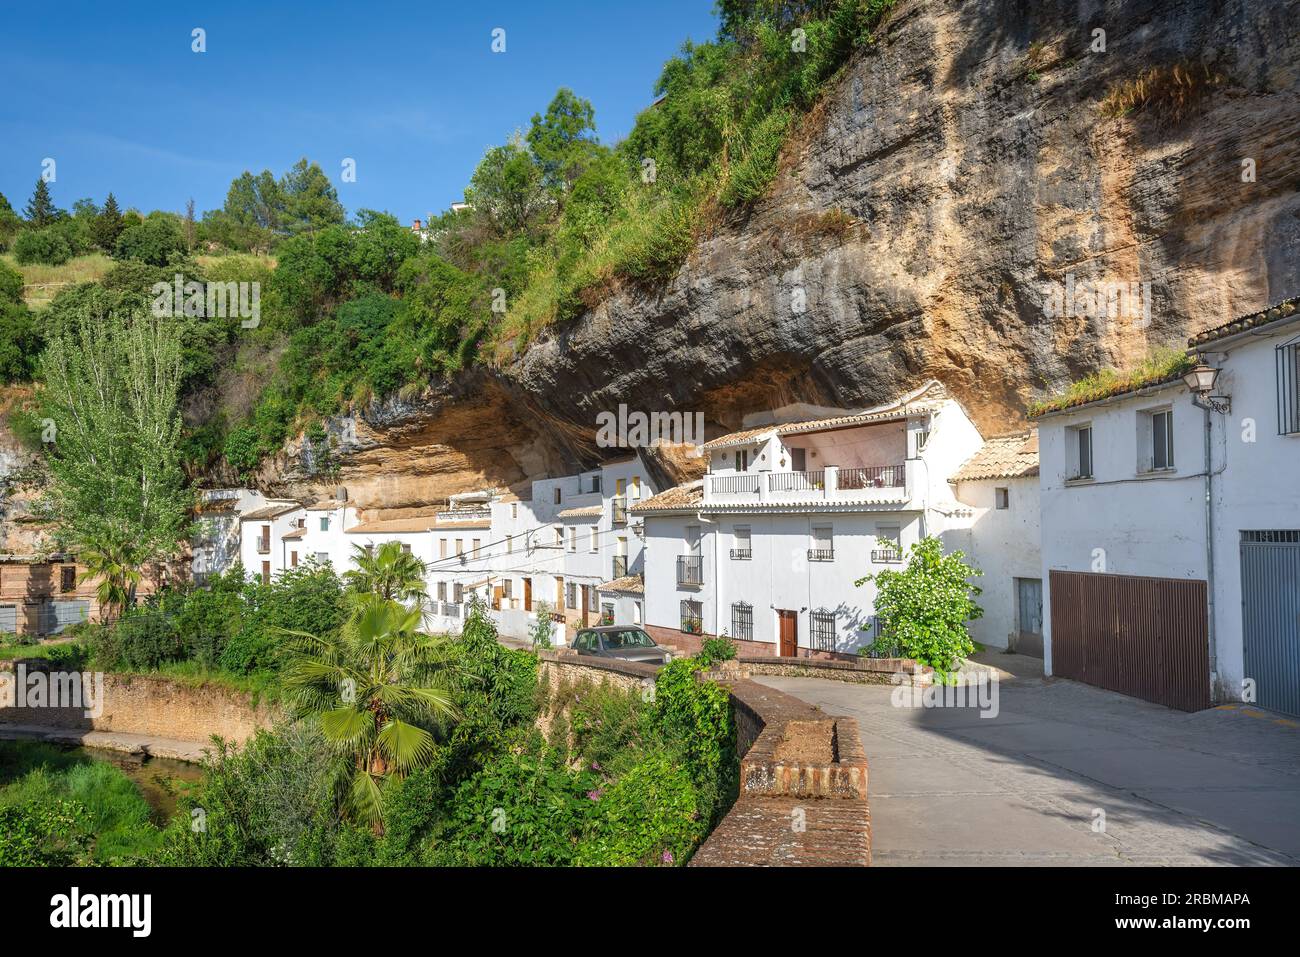 Calle Jaboneria Street with Rocks dwellings - Setenil de las Bodegas, Andalusia, Spain Stock Photo